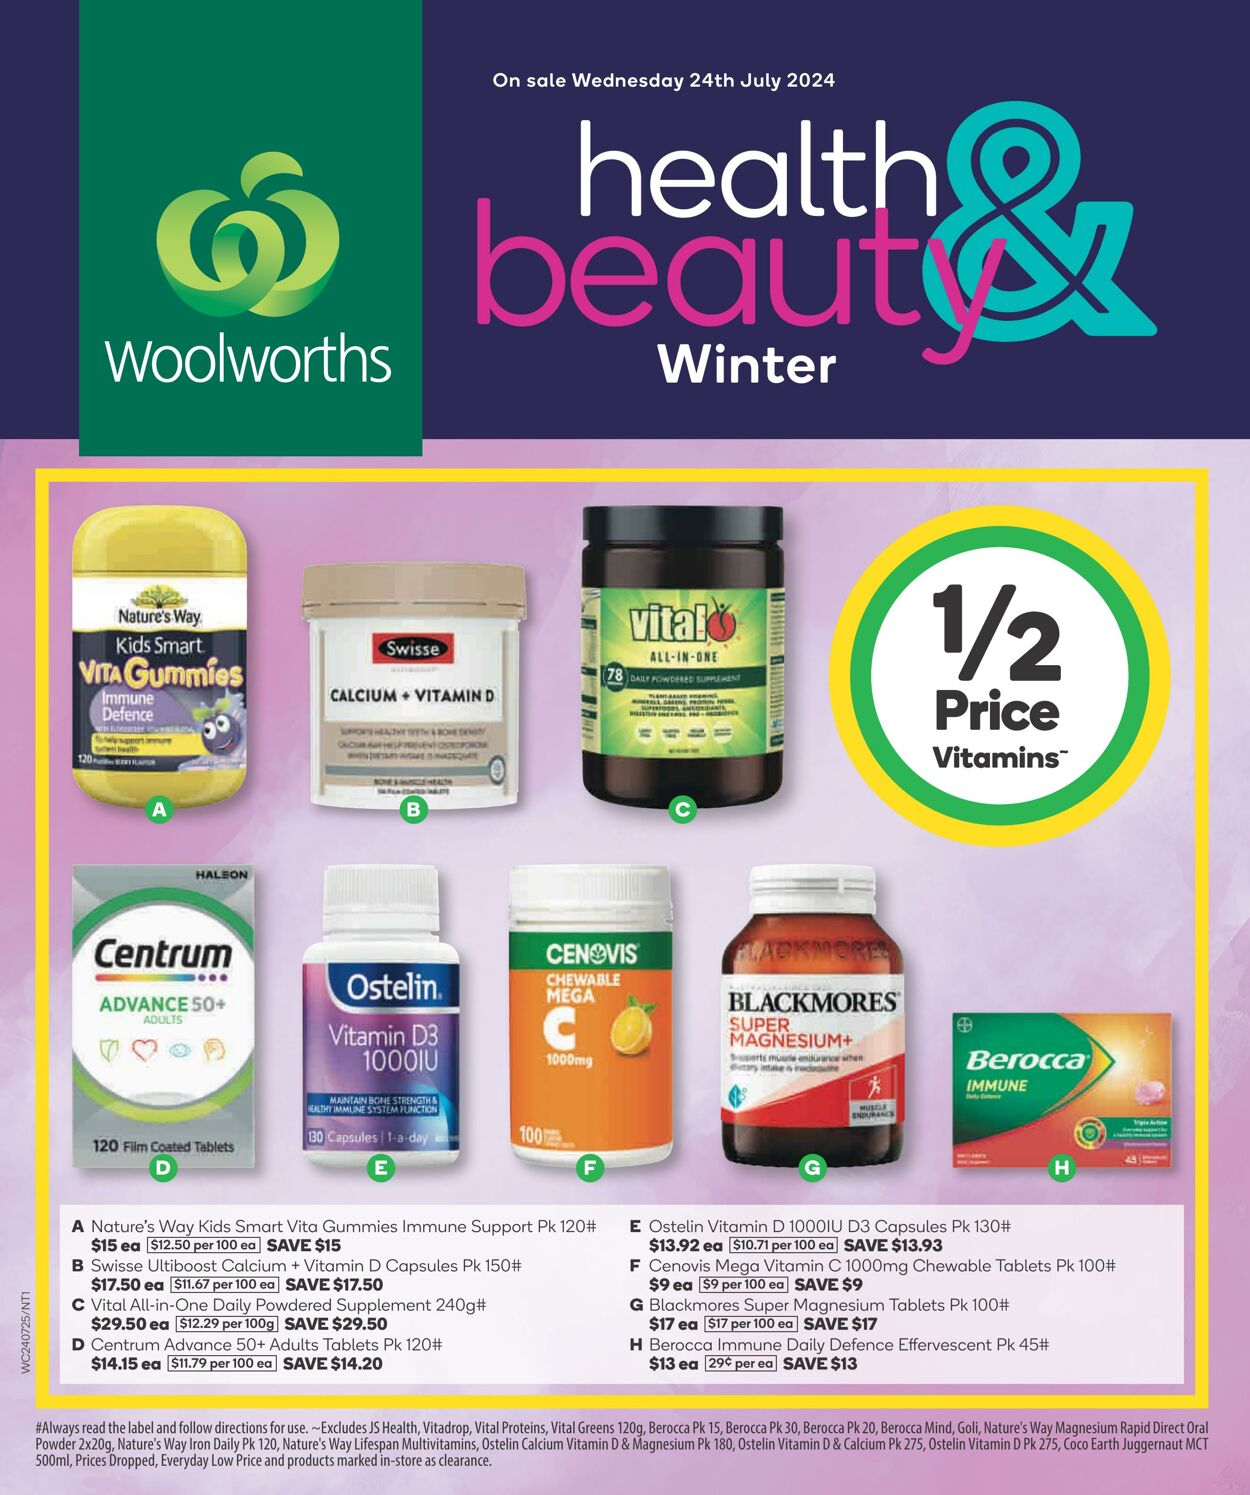 Catalogue Woolworths - Winter Health & Beauty Catalogue NT 24 Jul, 2024 - 30 Jul, 2024